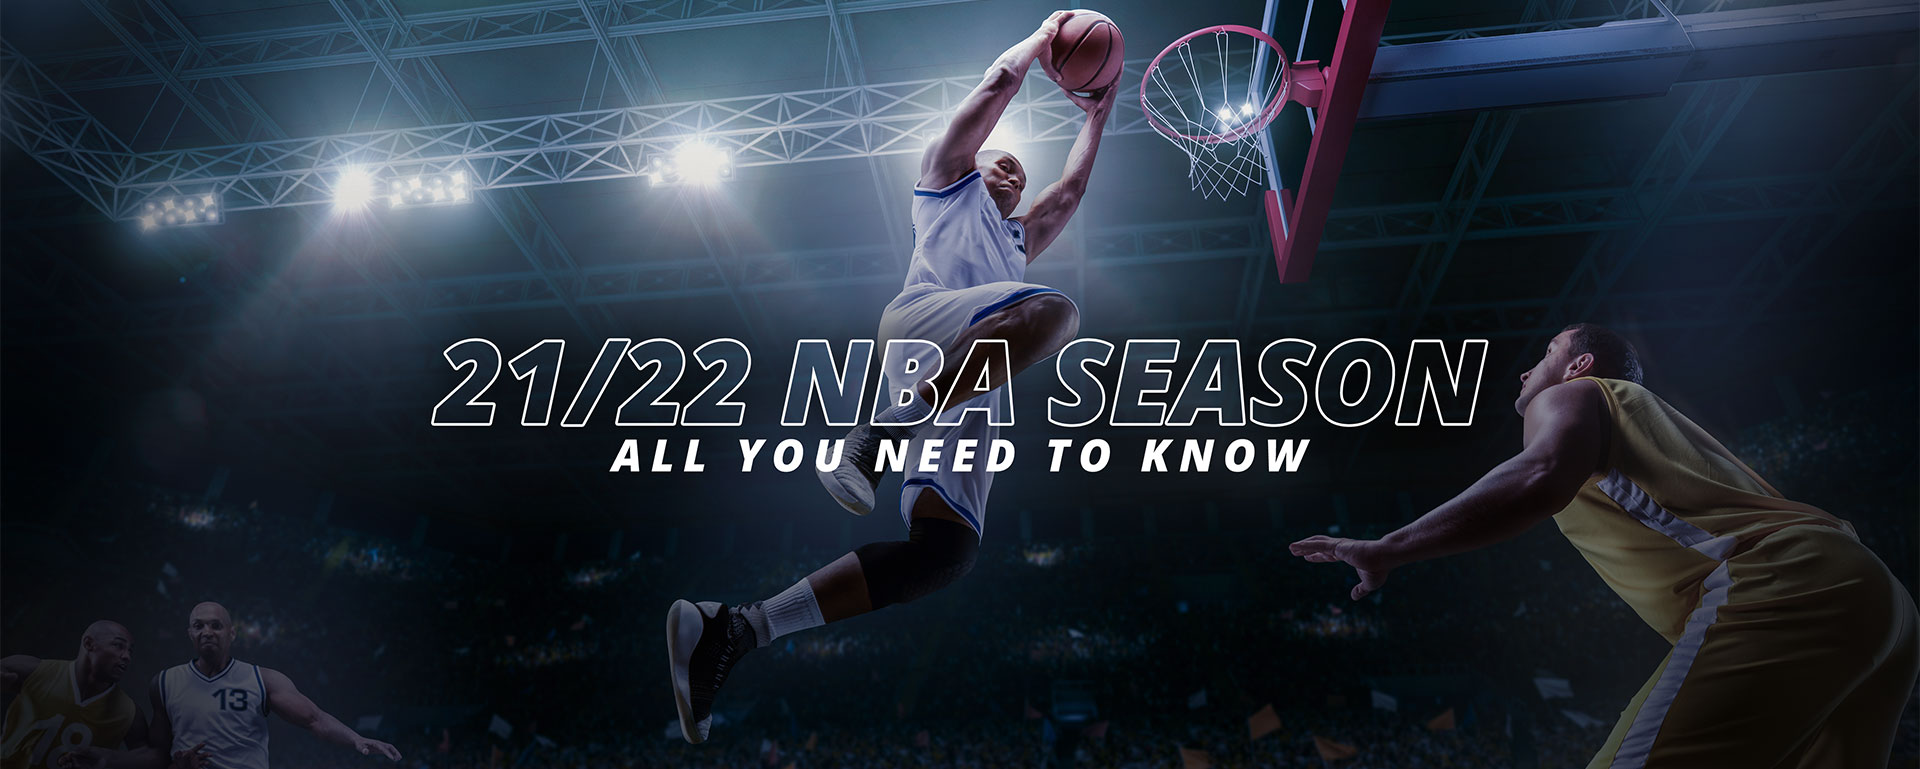 2021/22 NBA SEASON: ALL YOU NEED TO KNOW